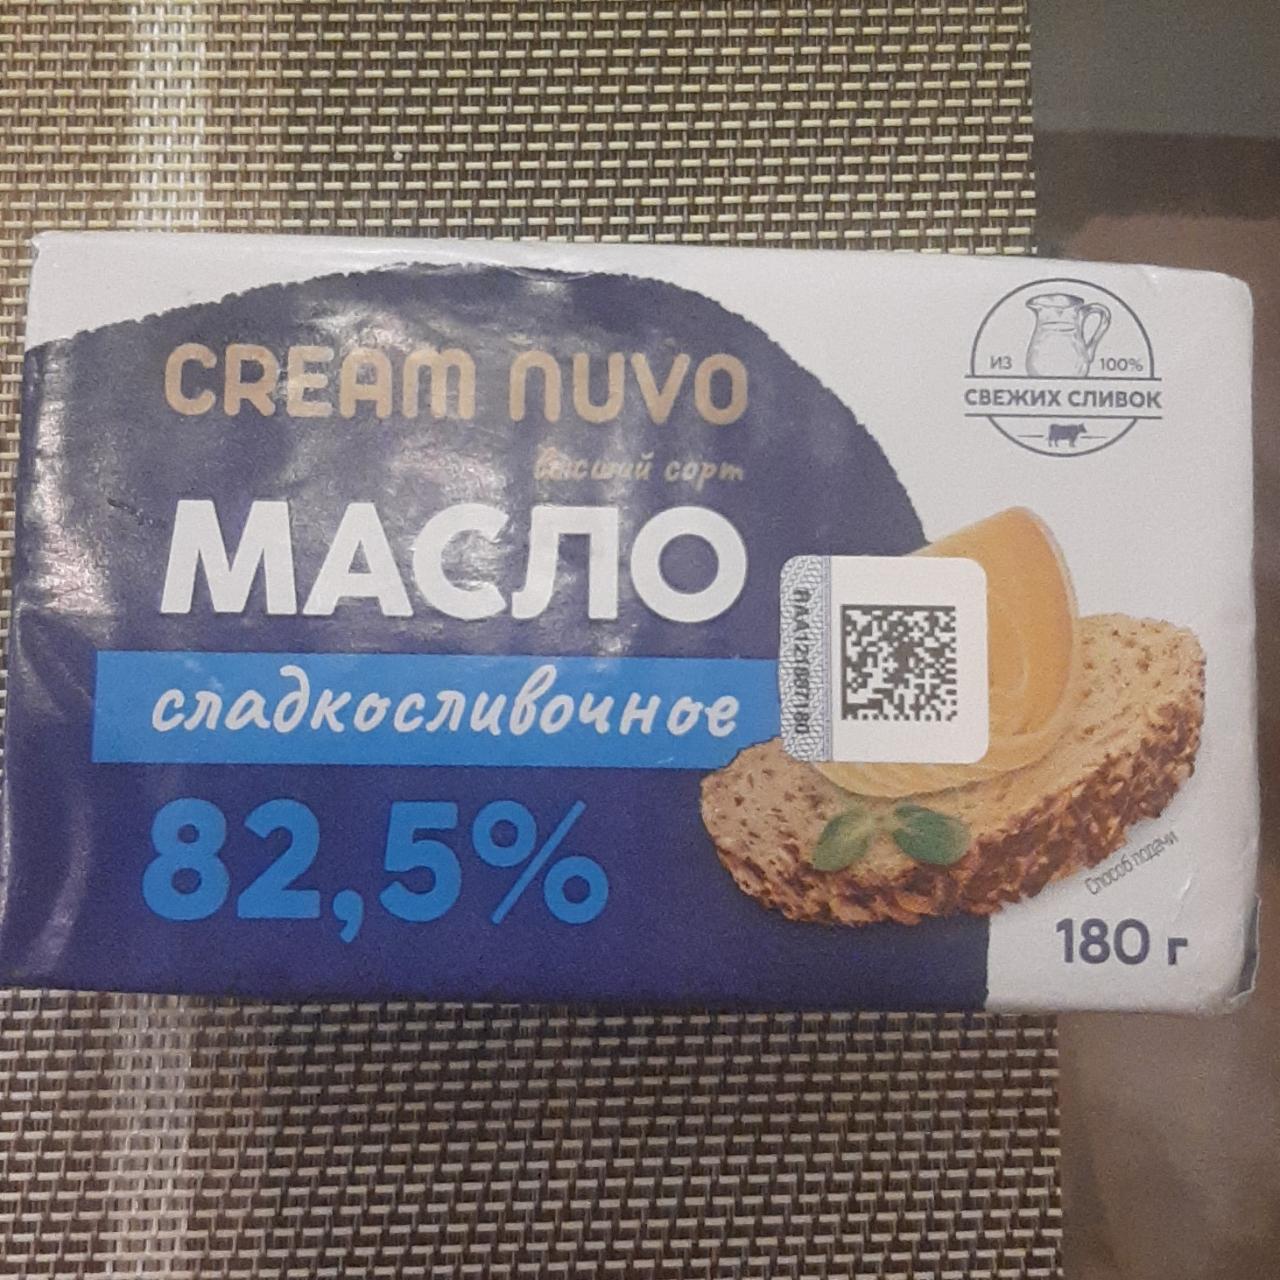 Фото - Масло сладкосливочное 82.5% Cream Nuvo